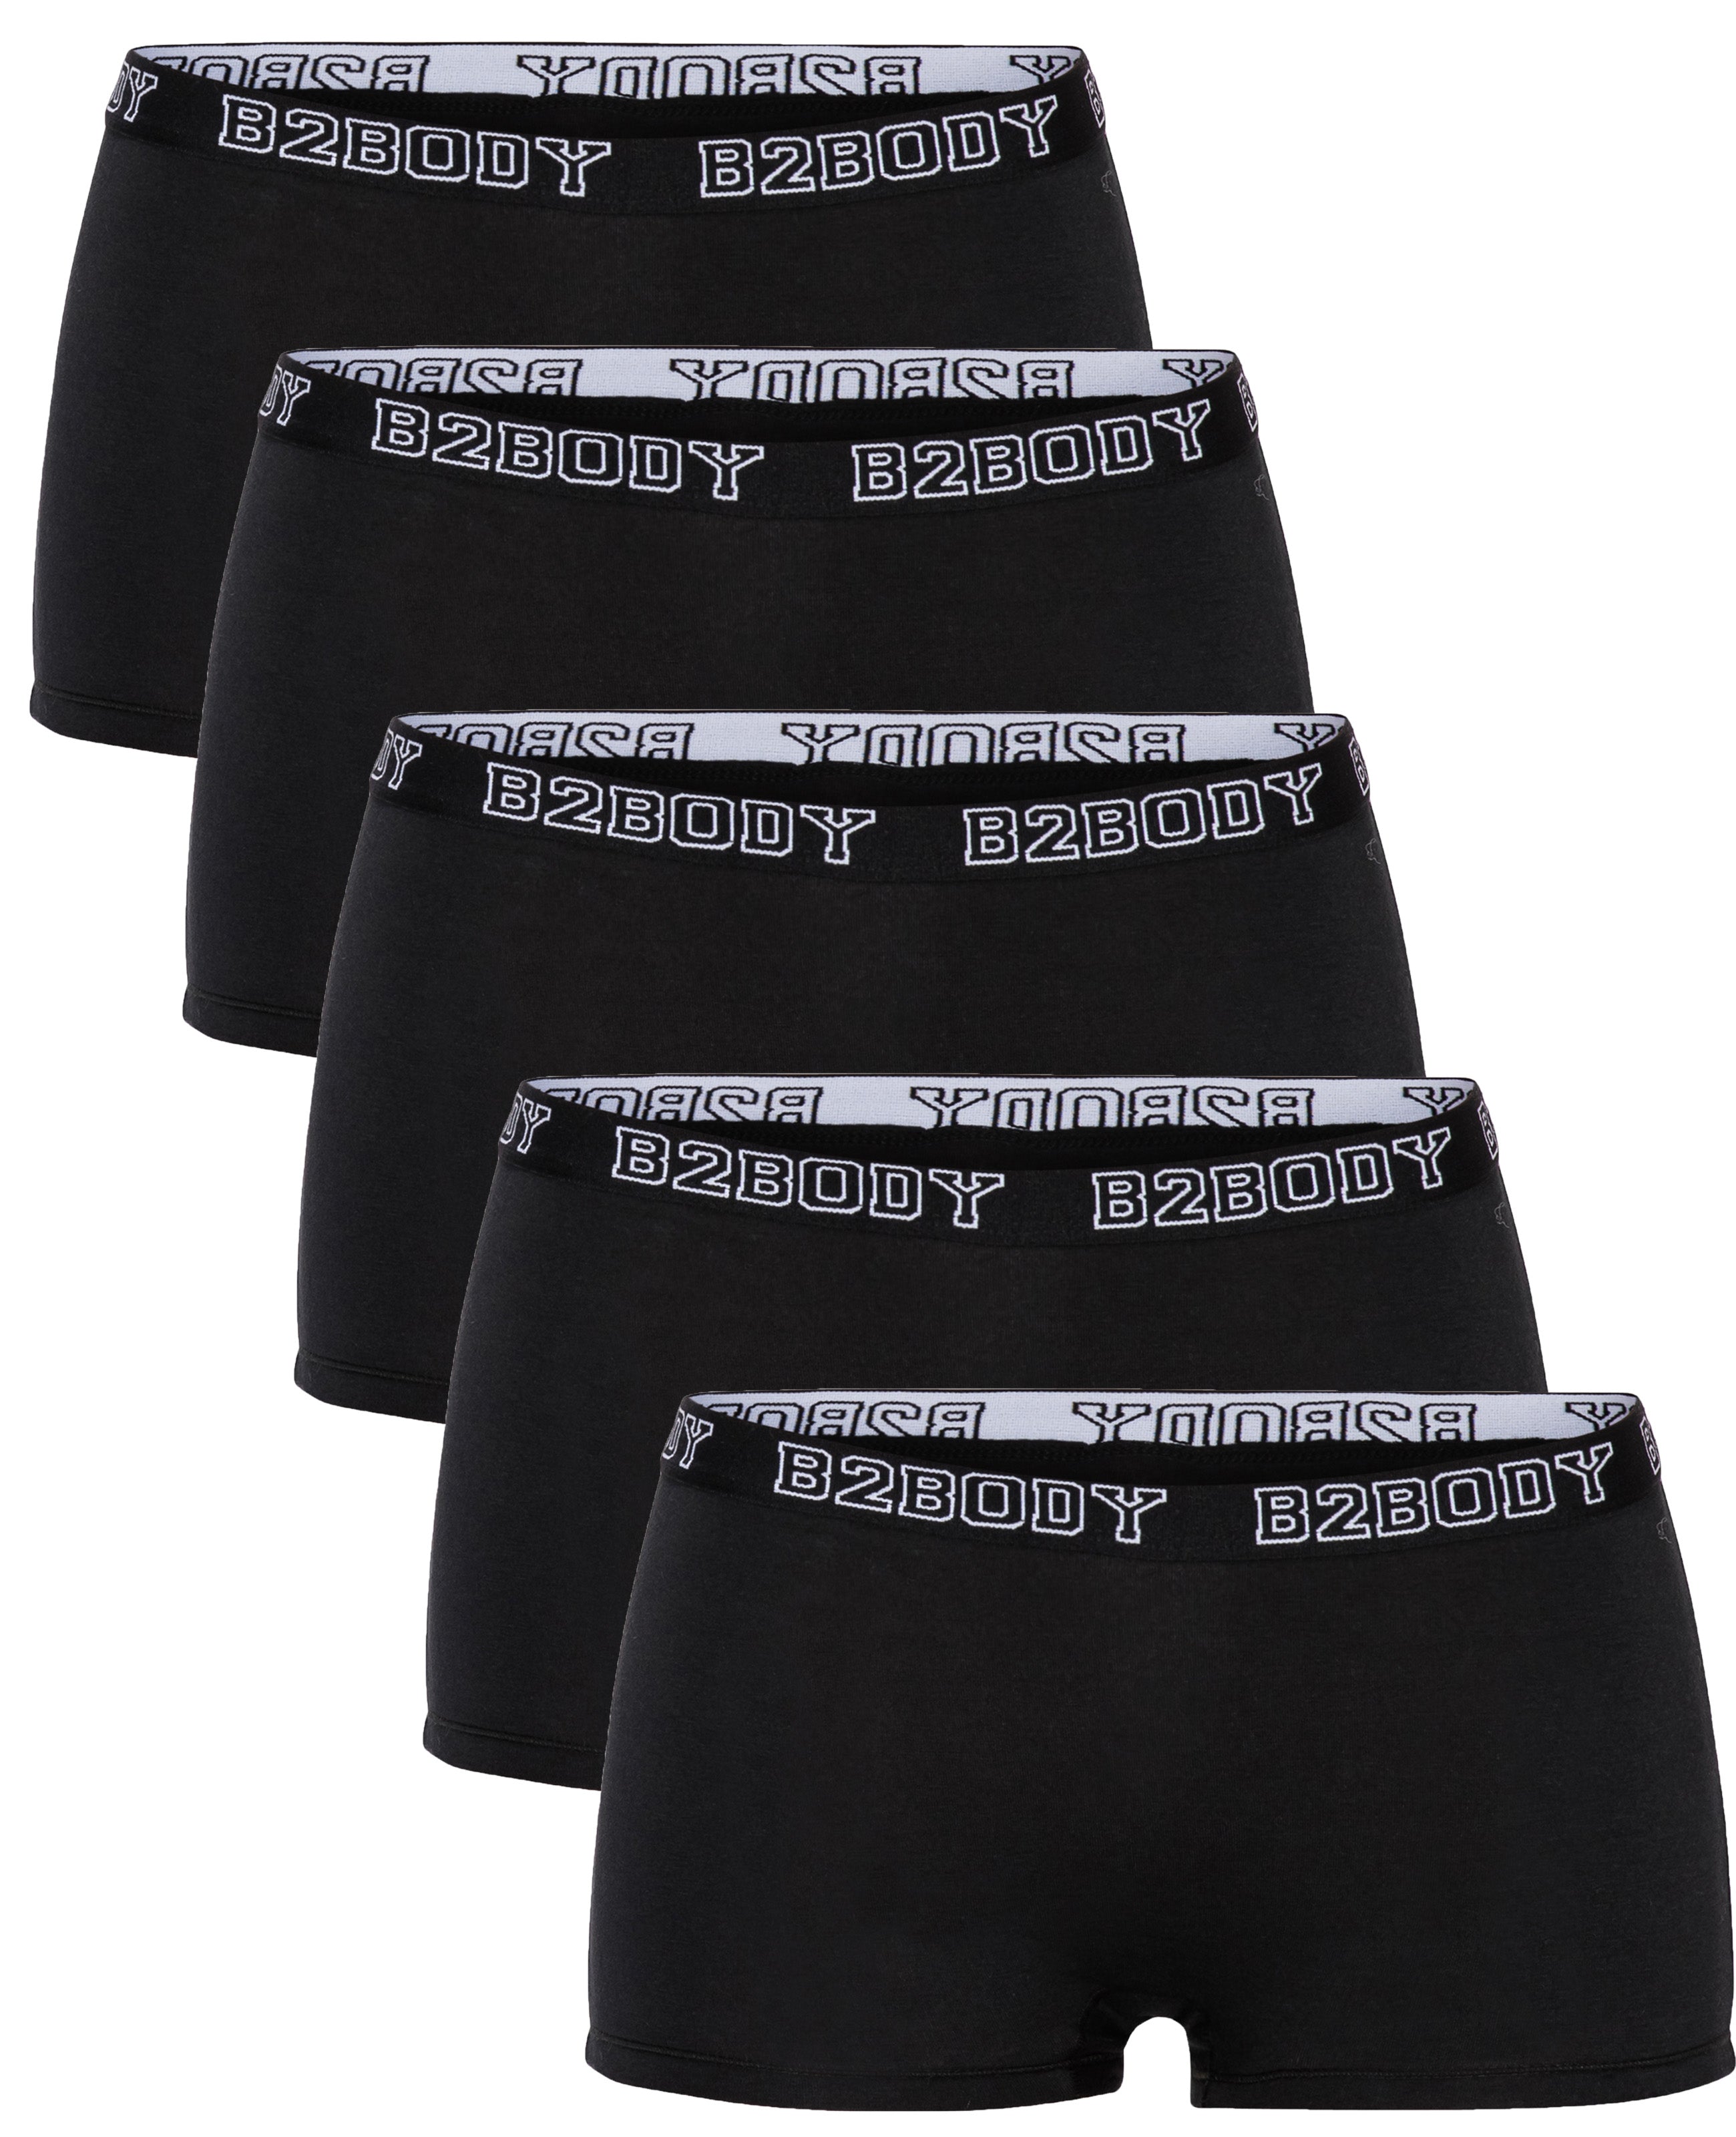 Cotton Boyshort Panties Multi-Pack – B2BODY - Formerly Barbra